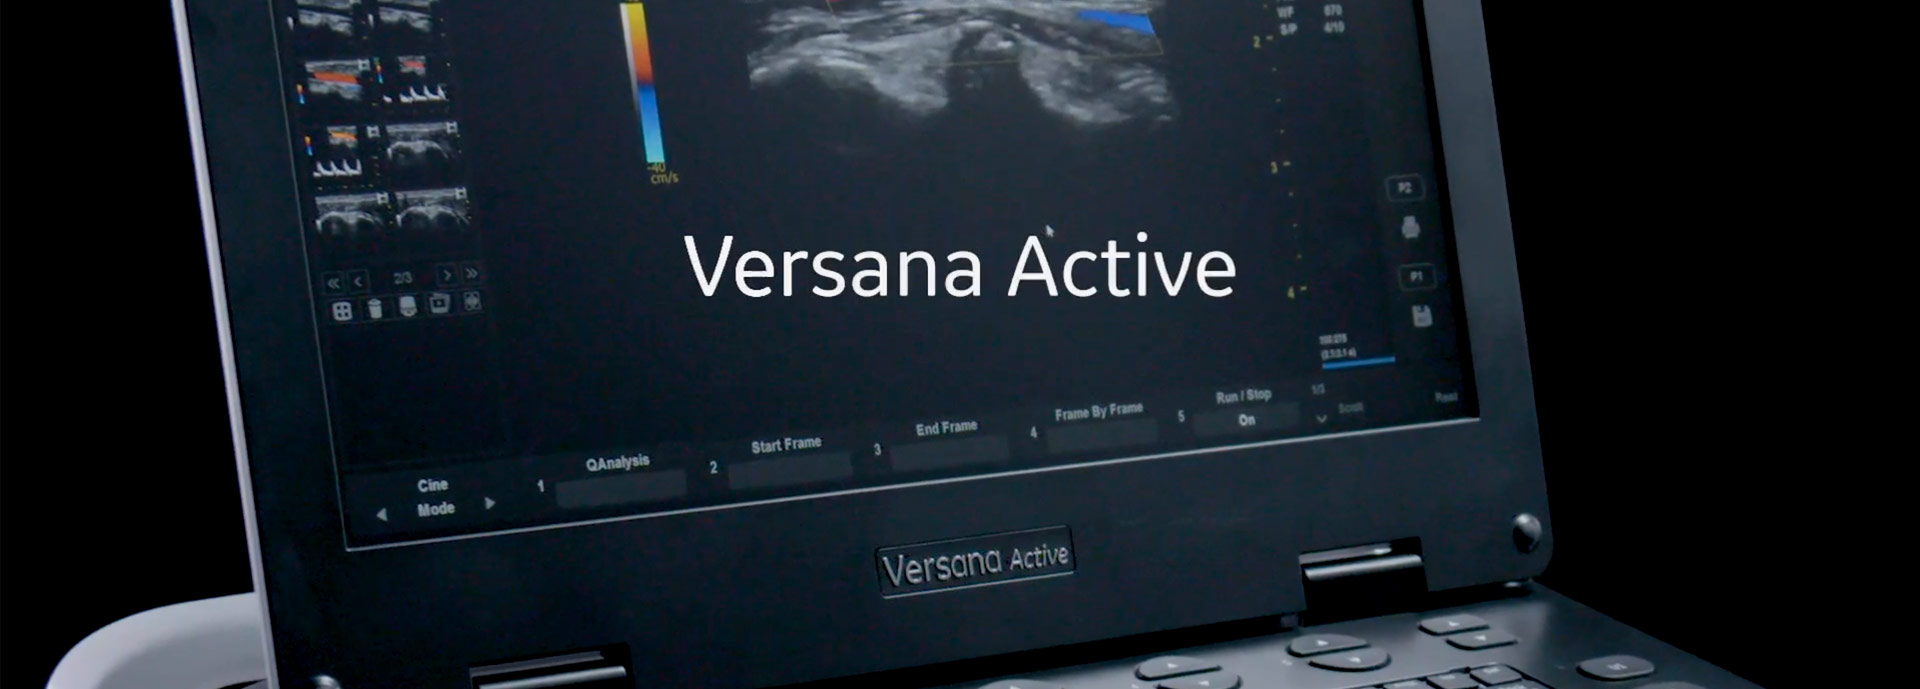 versana-active-video1